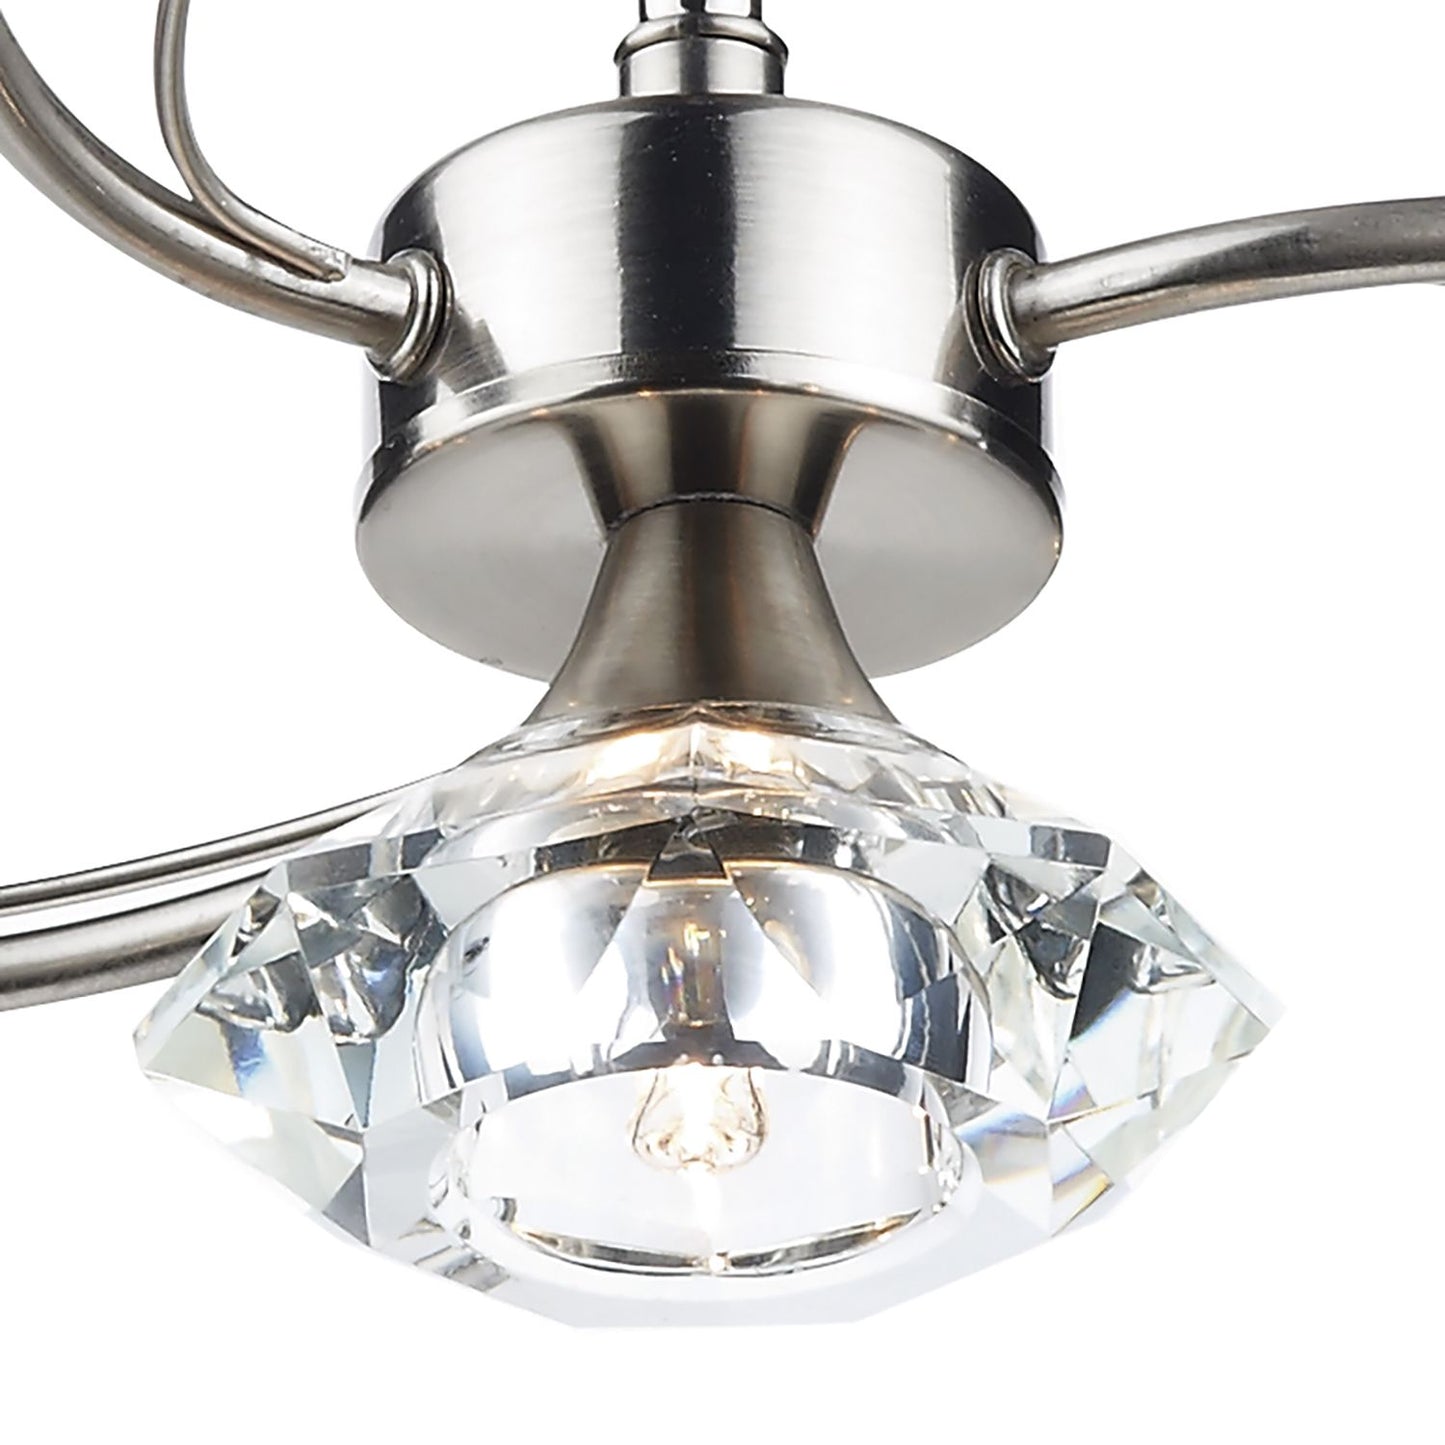 Earlsfield Satin Chrome 4 Lamp Ceiling Light - ID 7909